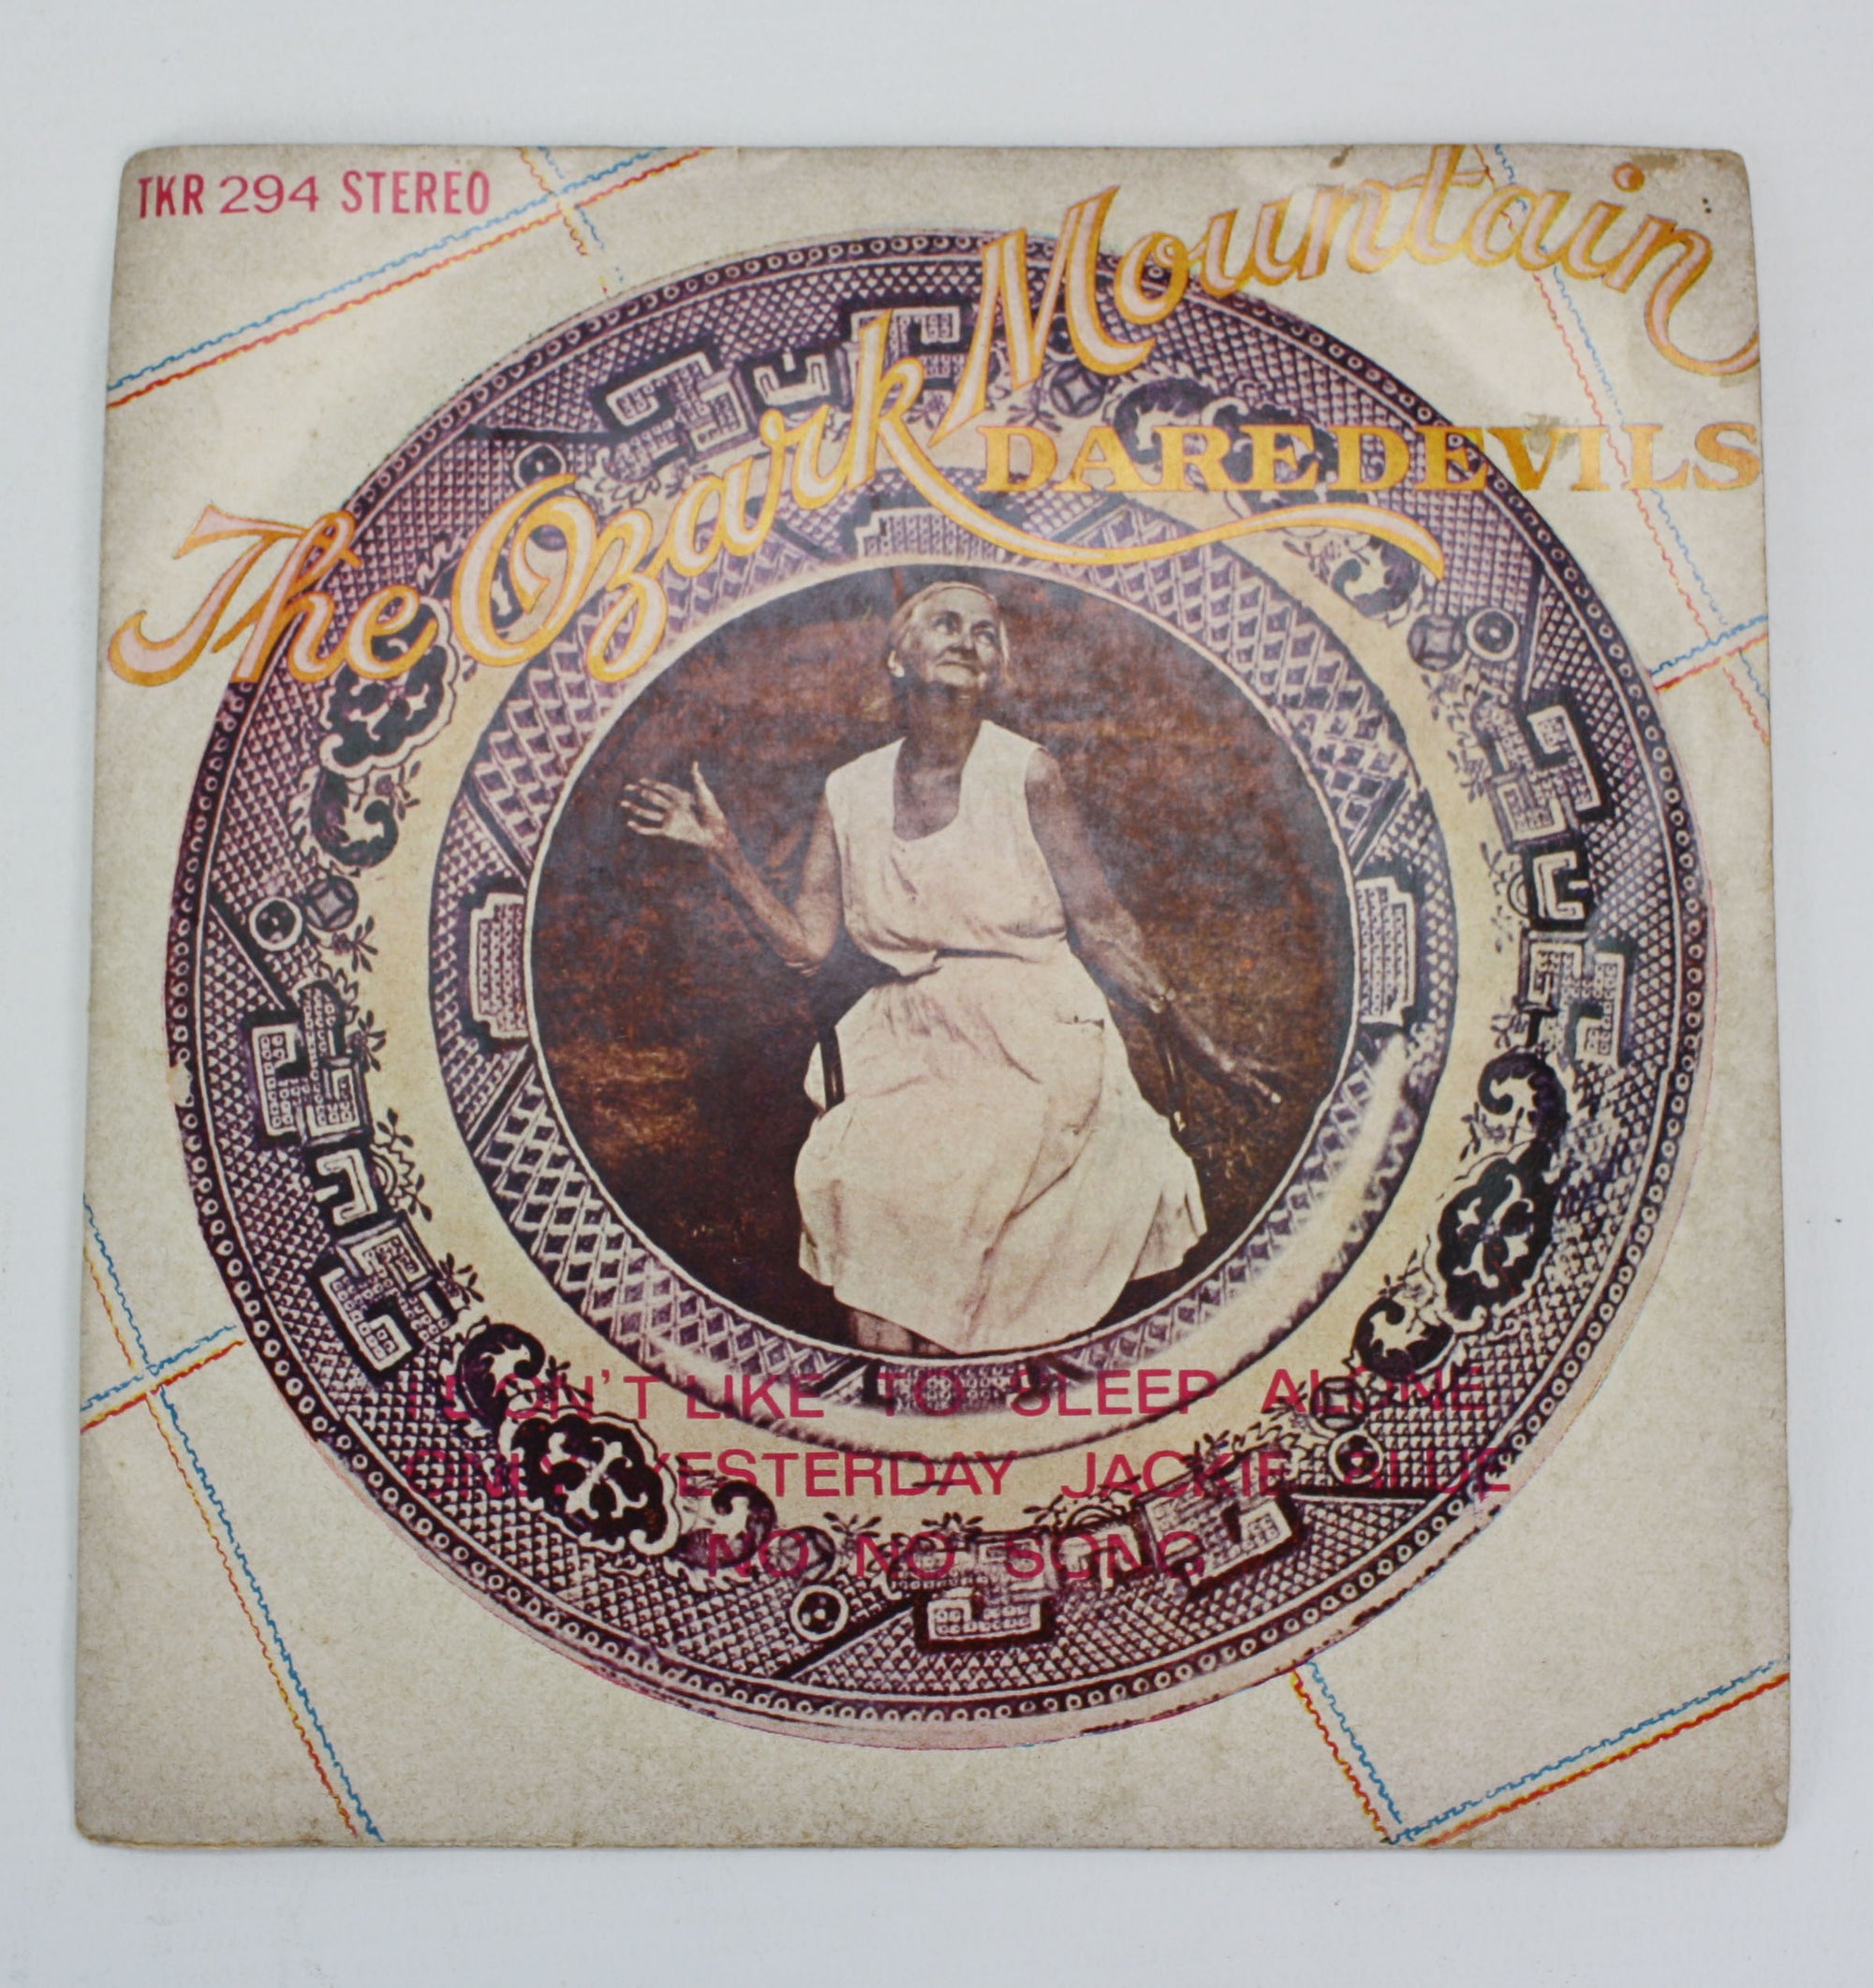 Rare Thai 7" 45 EP: Ringo Starr, Ozark Mountain Daredevils, Carpenters, Paul Anka - farangshop-co